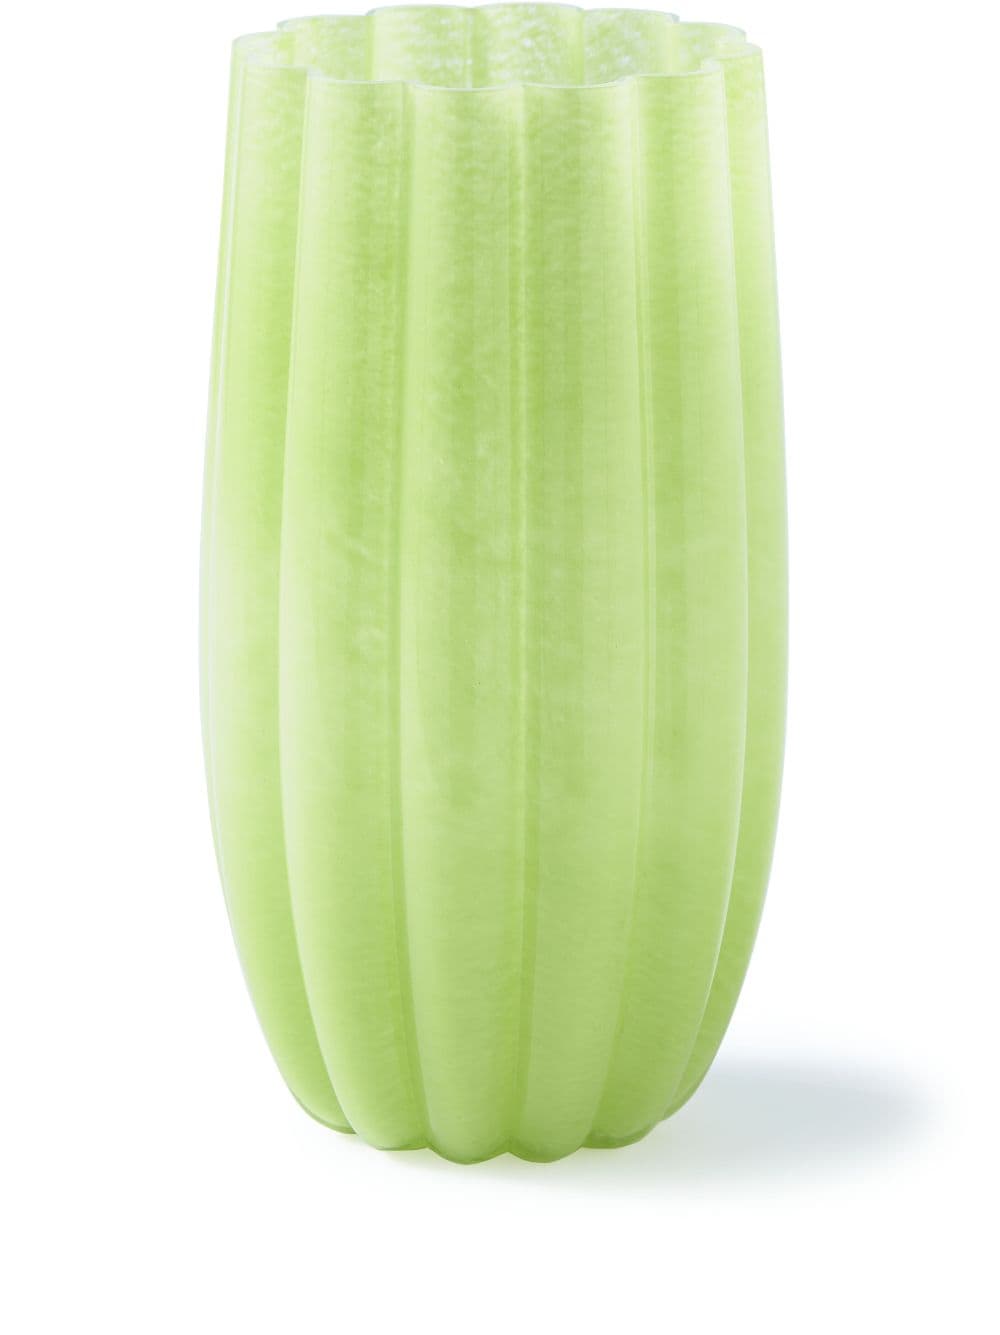 POLSPOTTEN large Melon glass vase (38cm) - Green von POLSPOTTEN